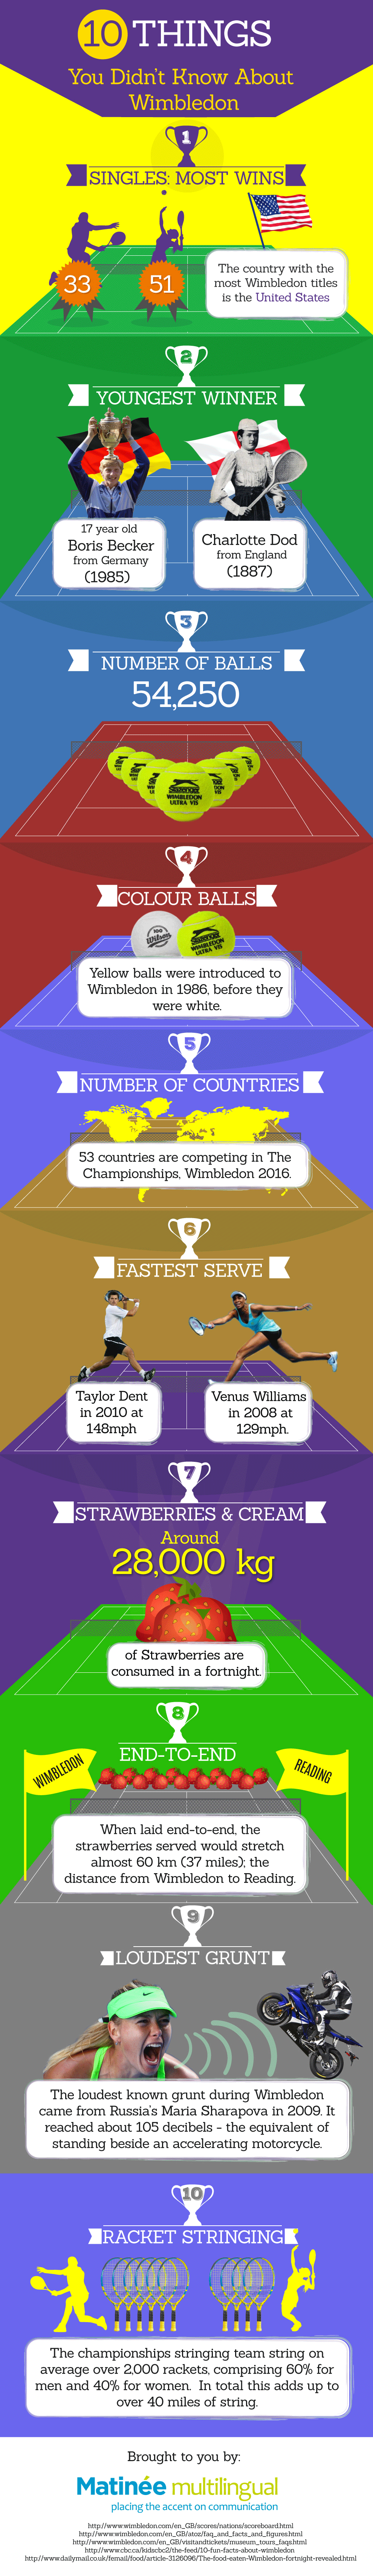 Wimbledon Infographic Matinee